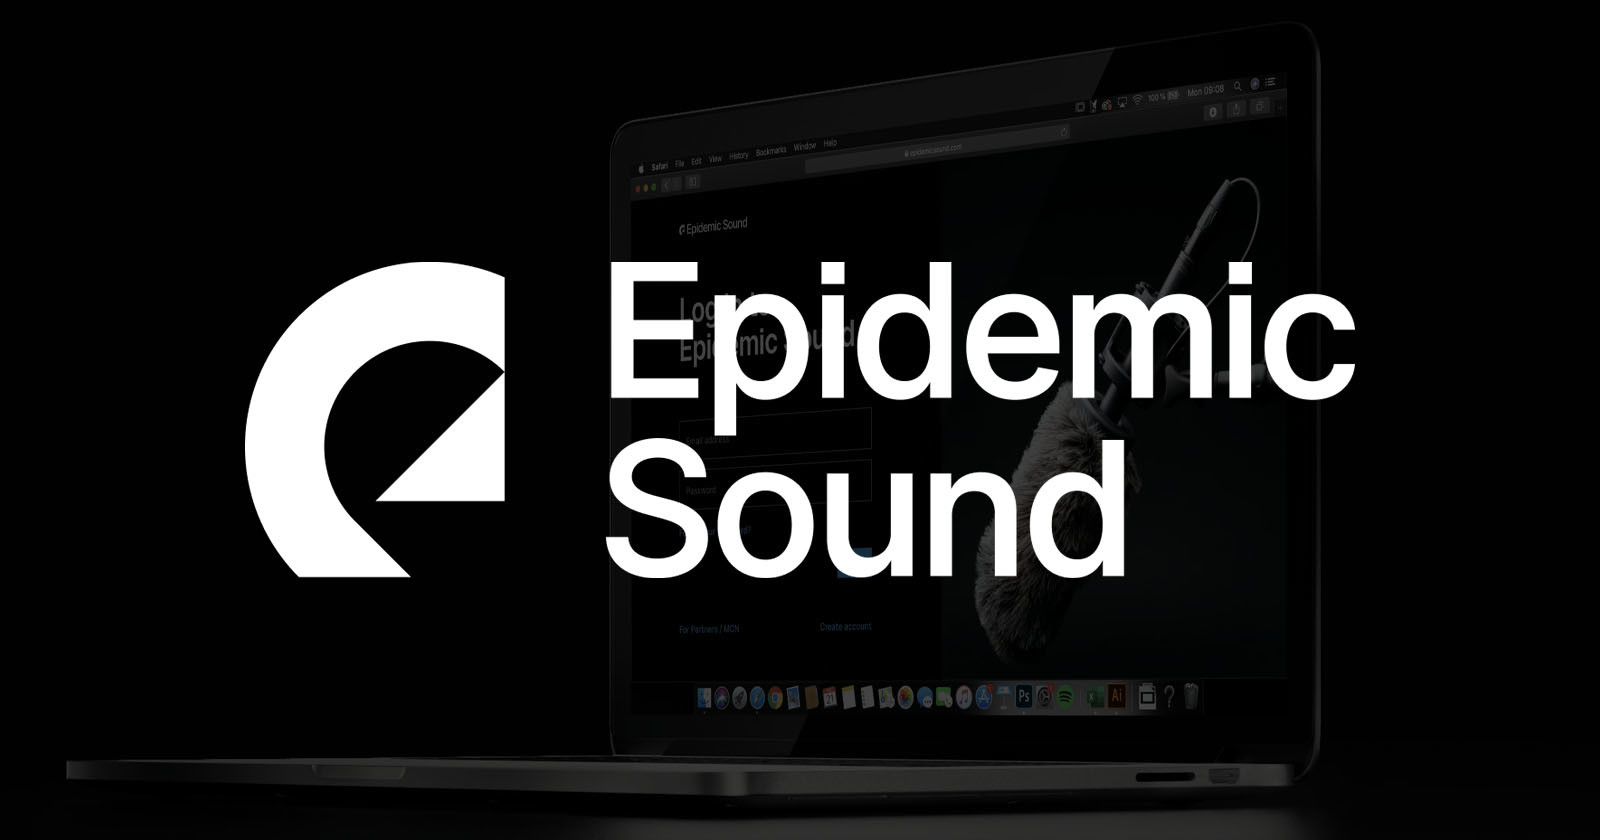 Epidemic sounds music. Epidemic Sound. Epidemic Sound logo. МЕТА-саунд. Эпидемик саунд икона.